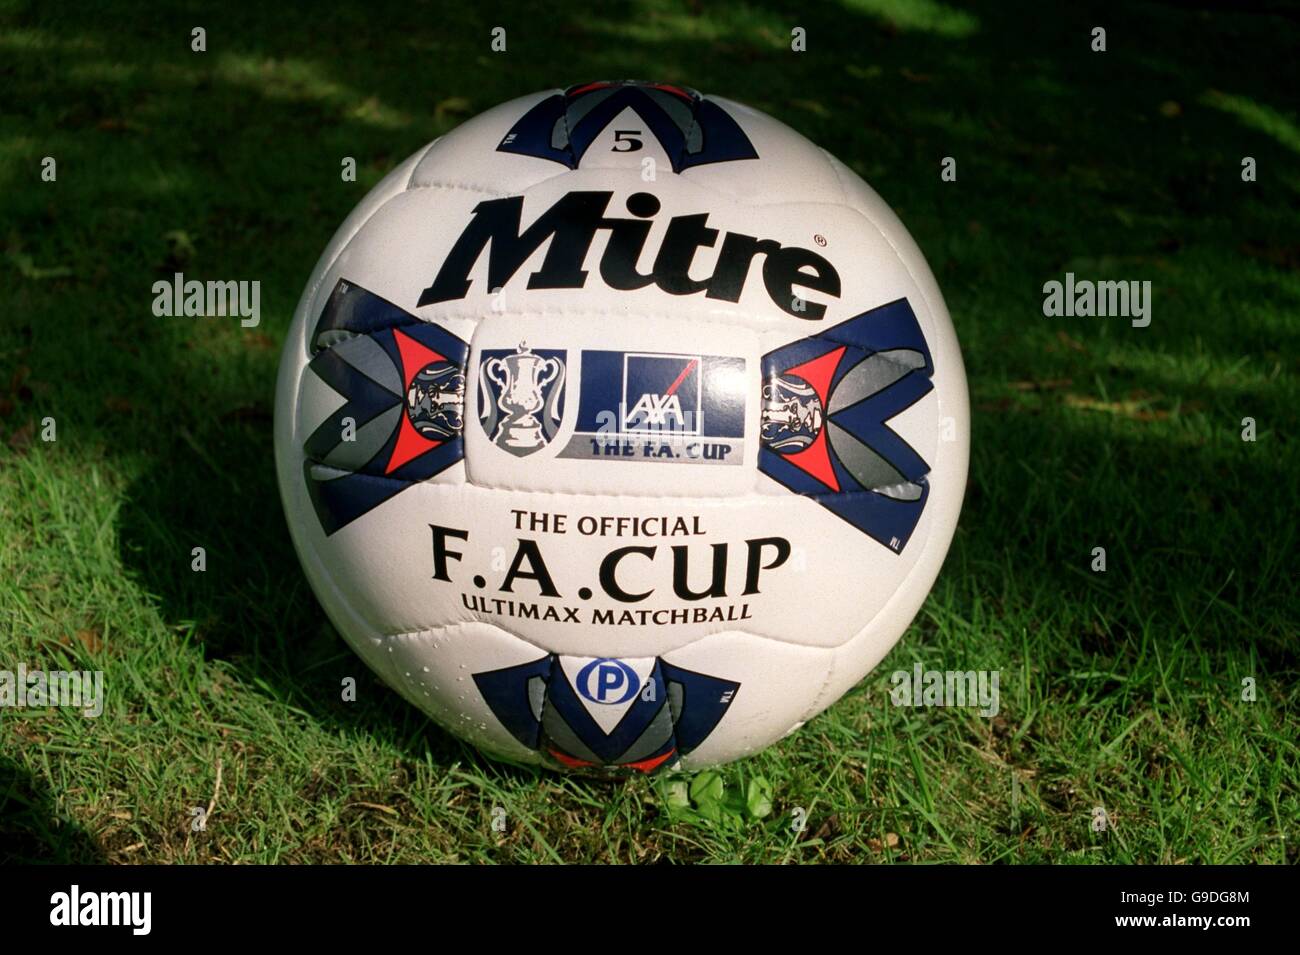 Soccer - AXA FA Cup - Official Mitre Ball Stock Photo